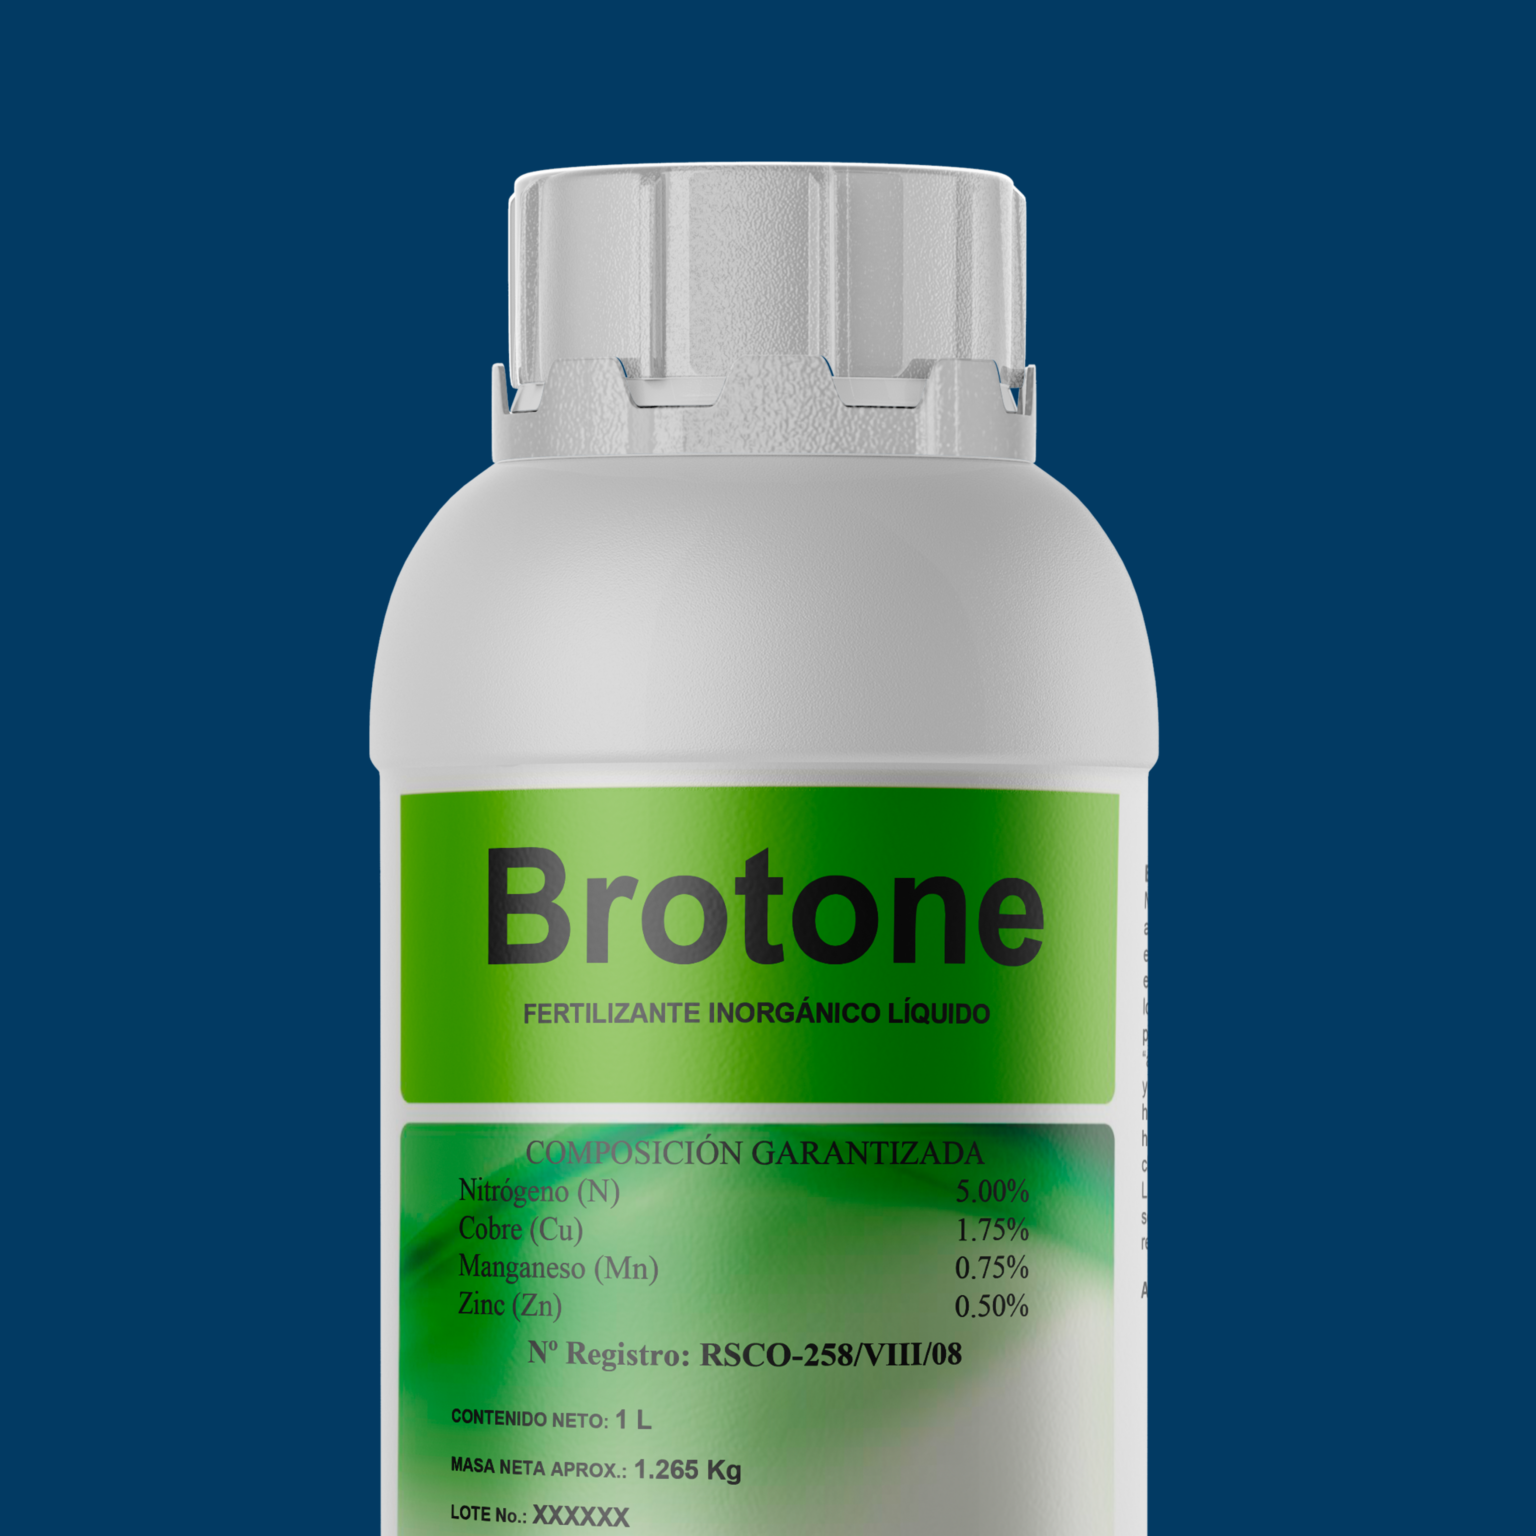 Brotone